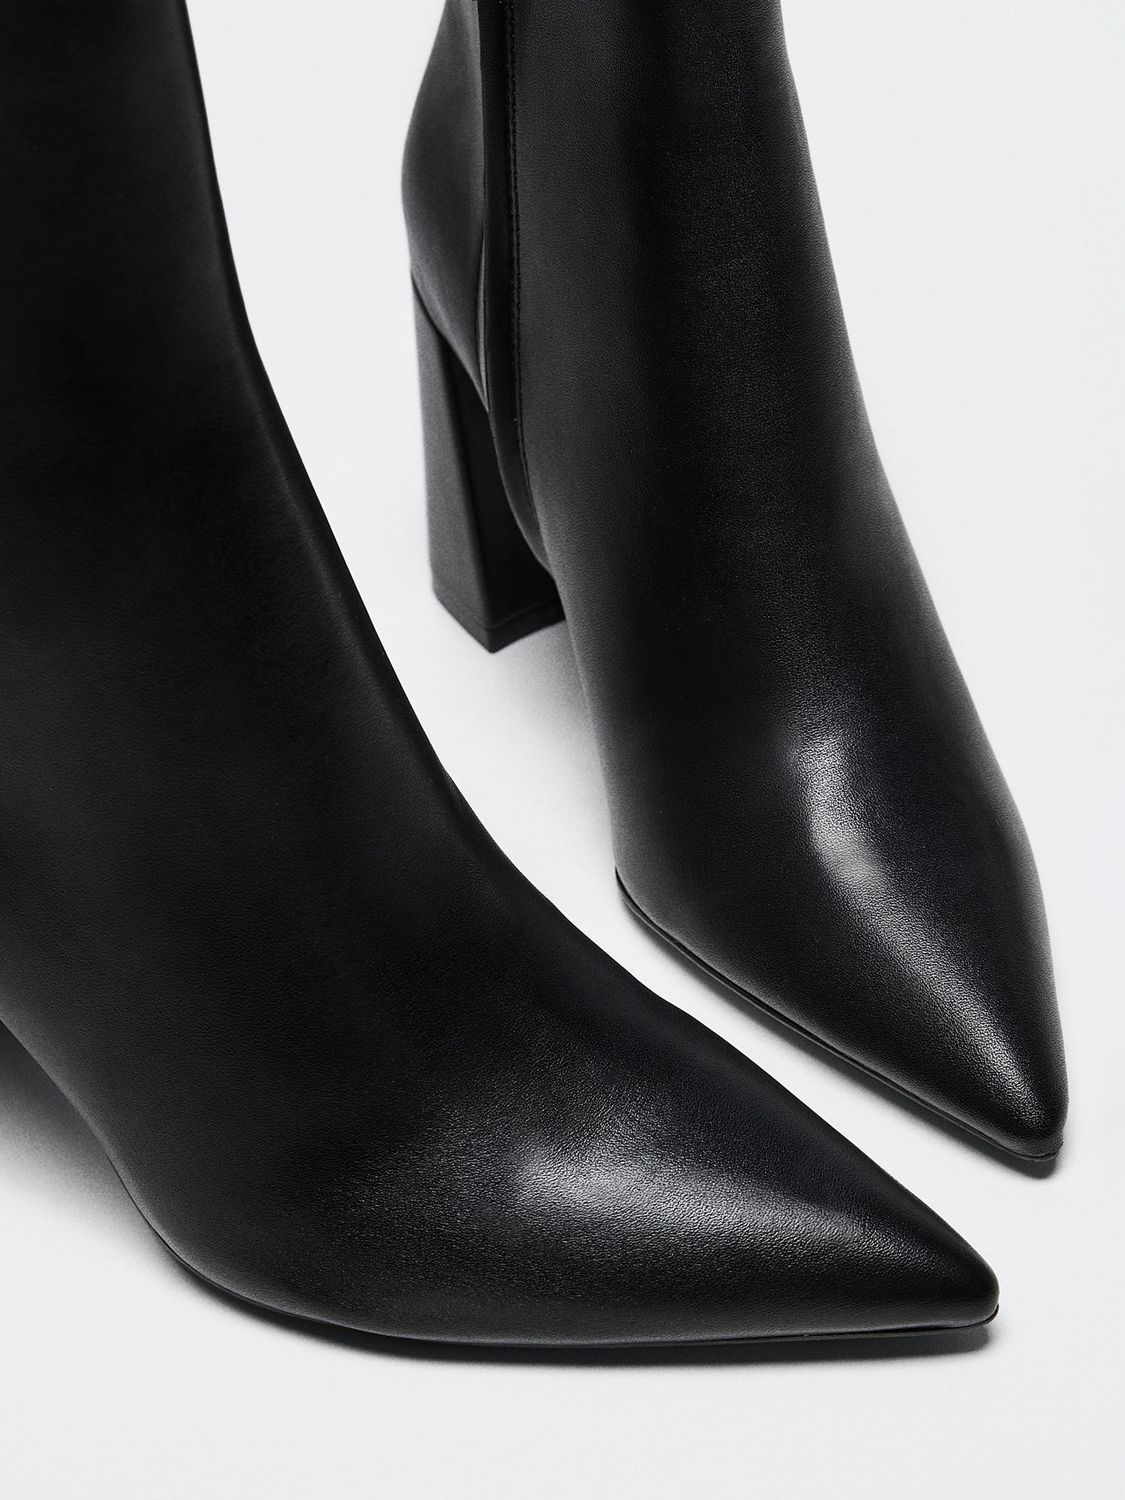 Mango Giro Faux-Leather Block Heel Ankle Boots, Black, 2